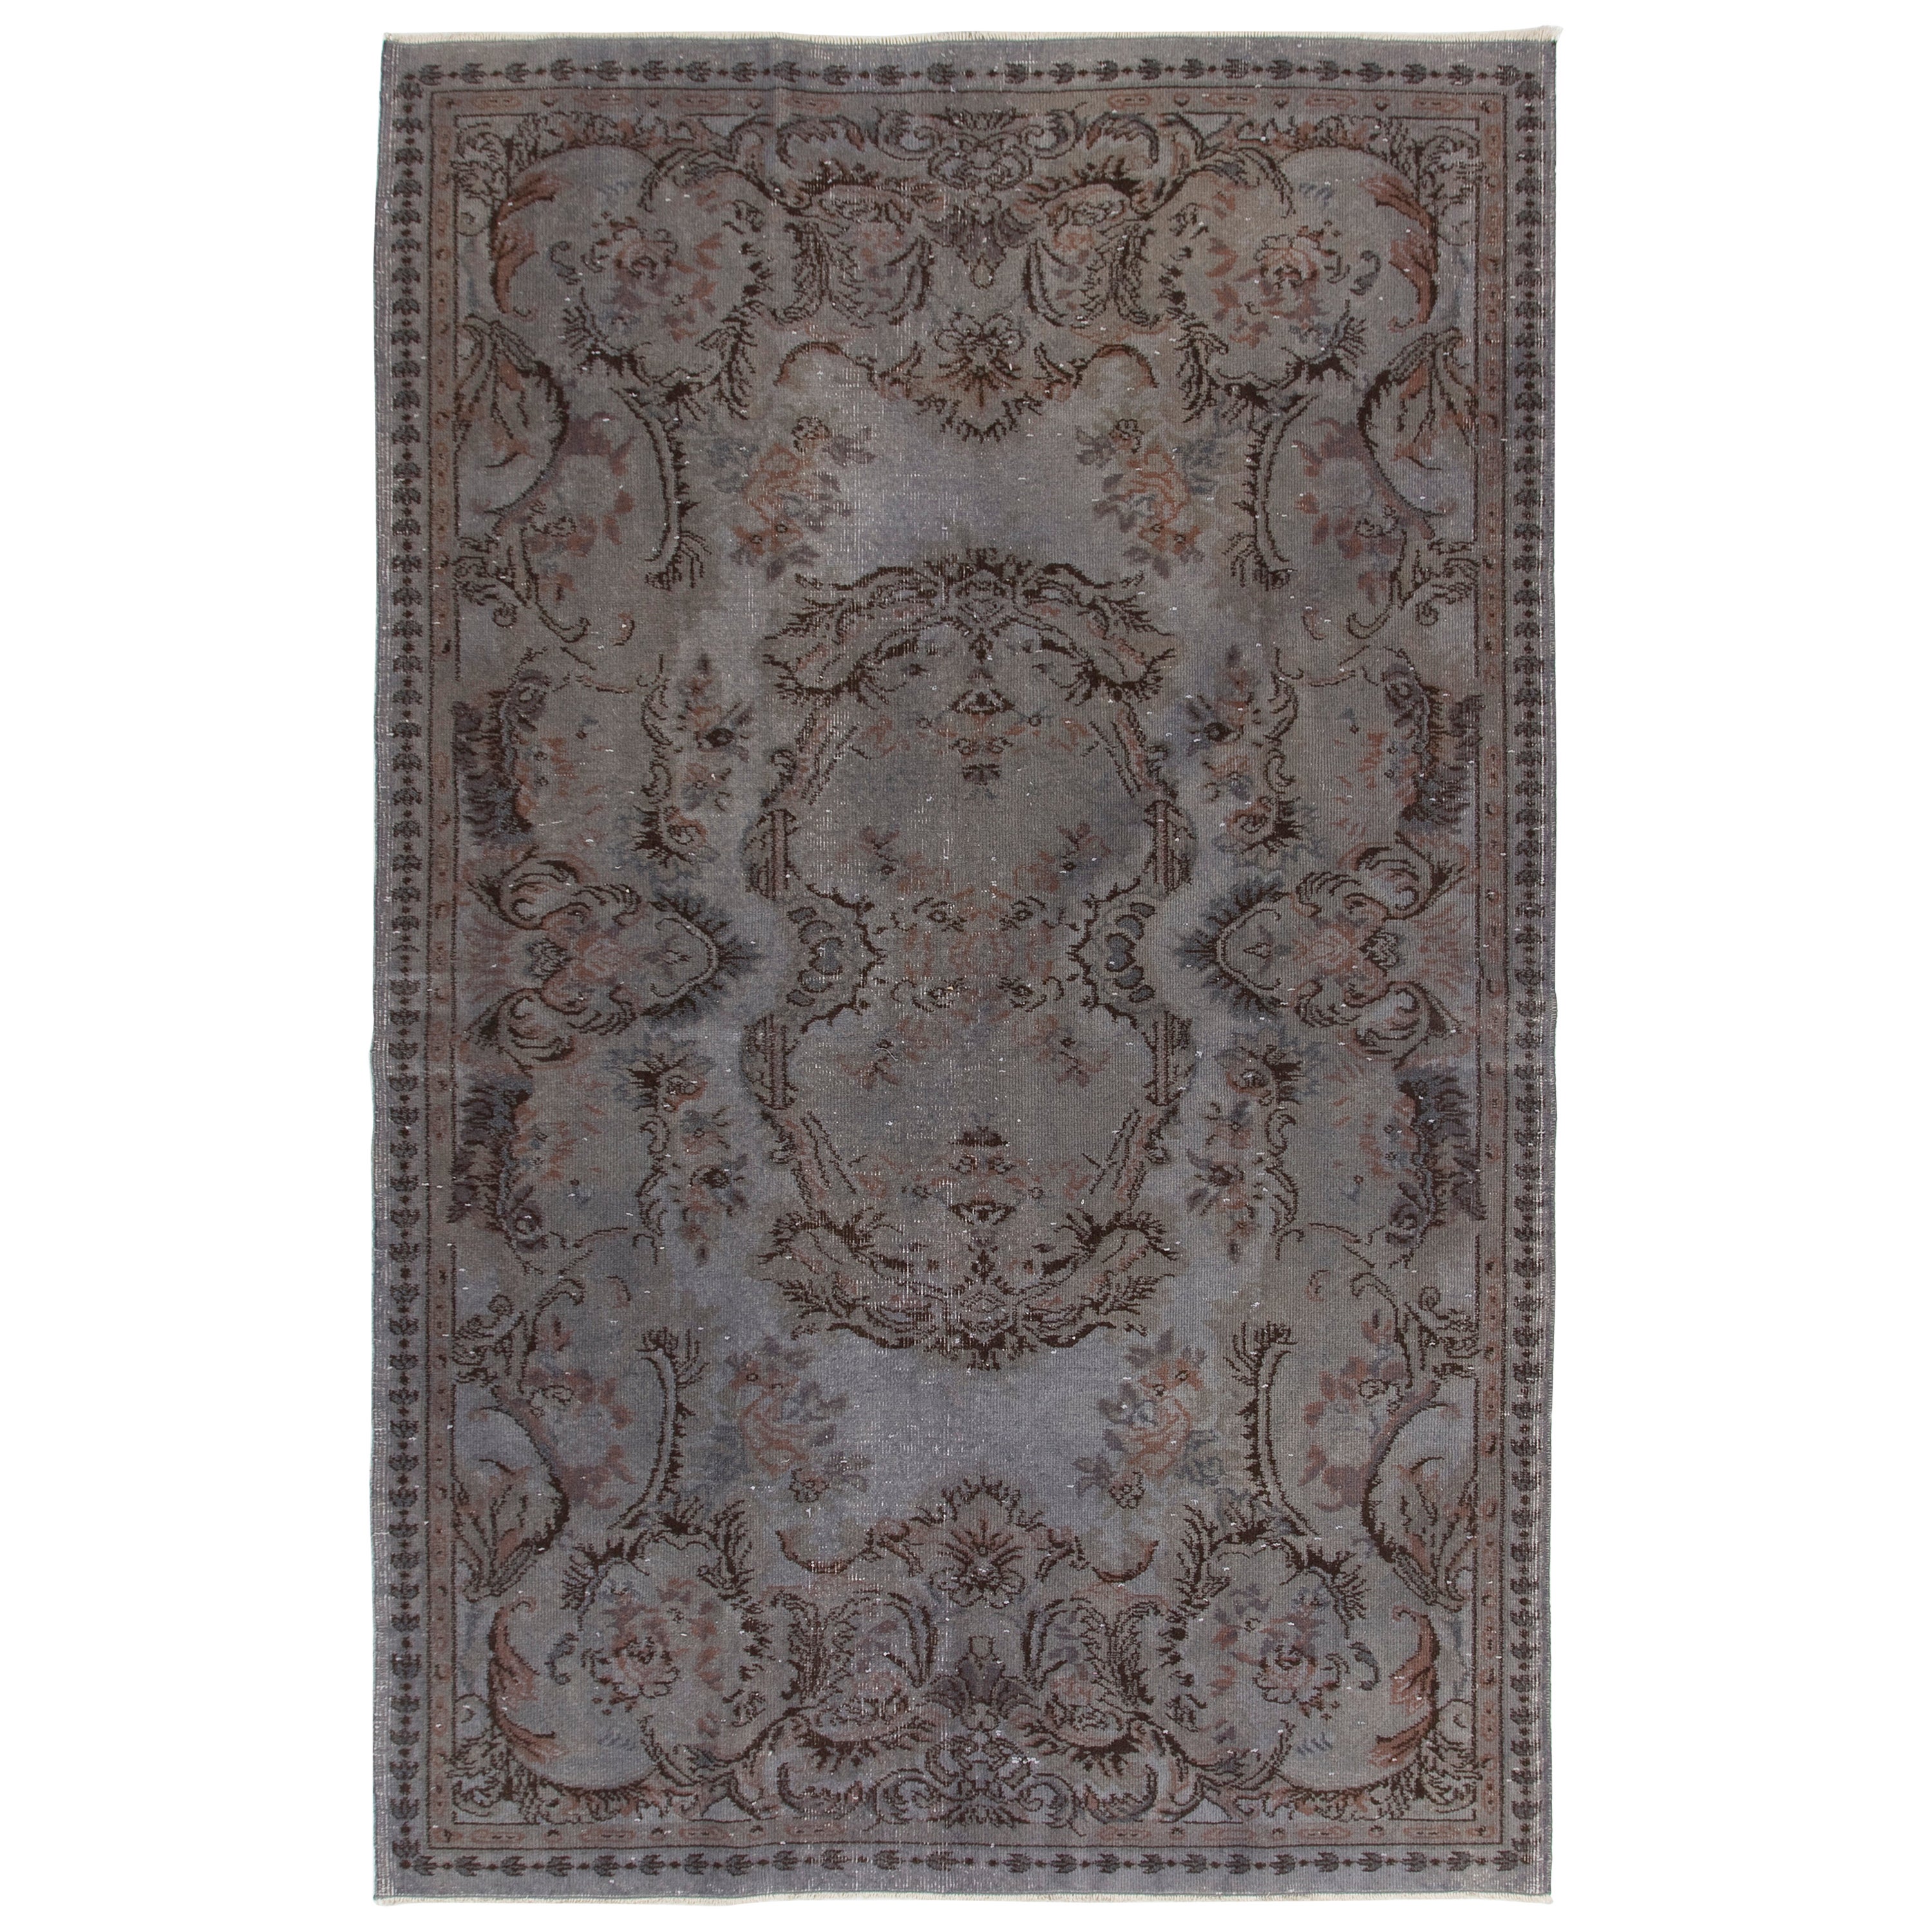 5.4x8.5 Ft French-Aubusson Inspired Turkish Rug, Gray Modern Handmade Carpet For Sale